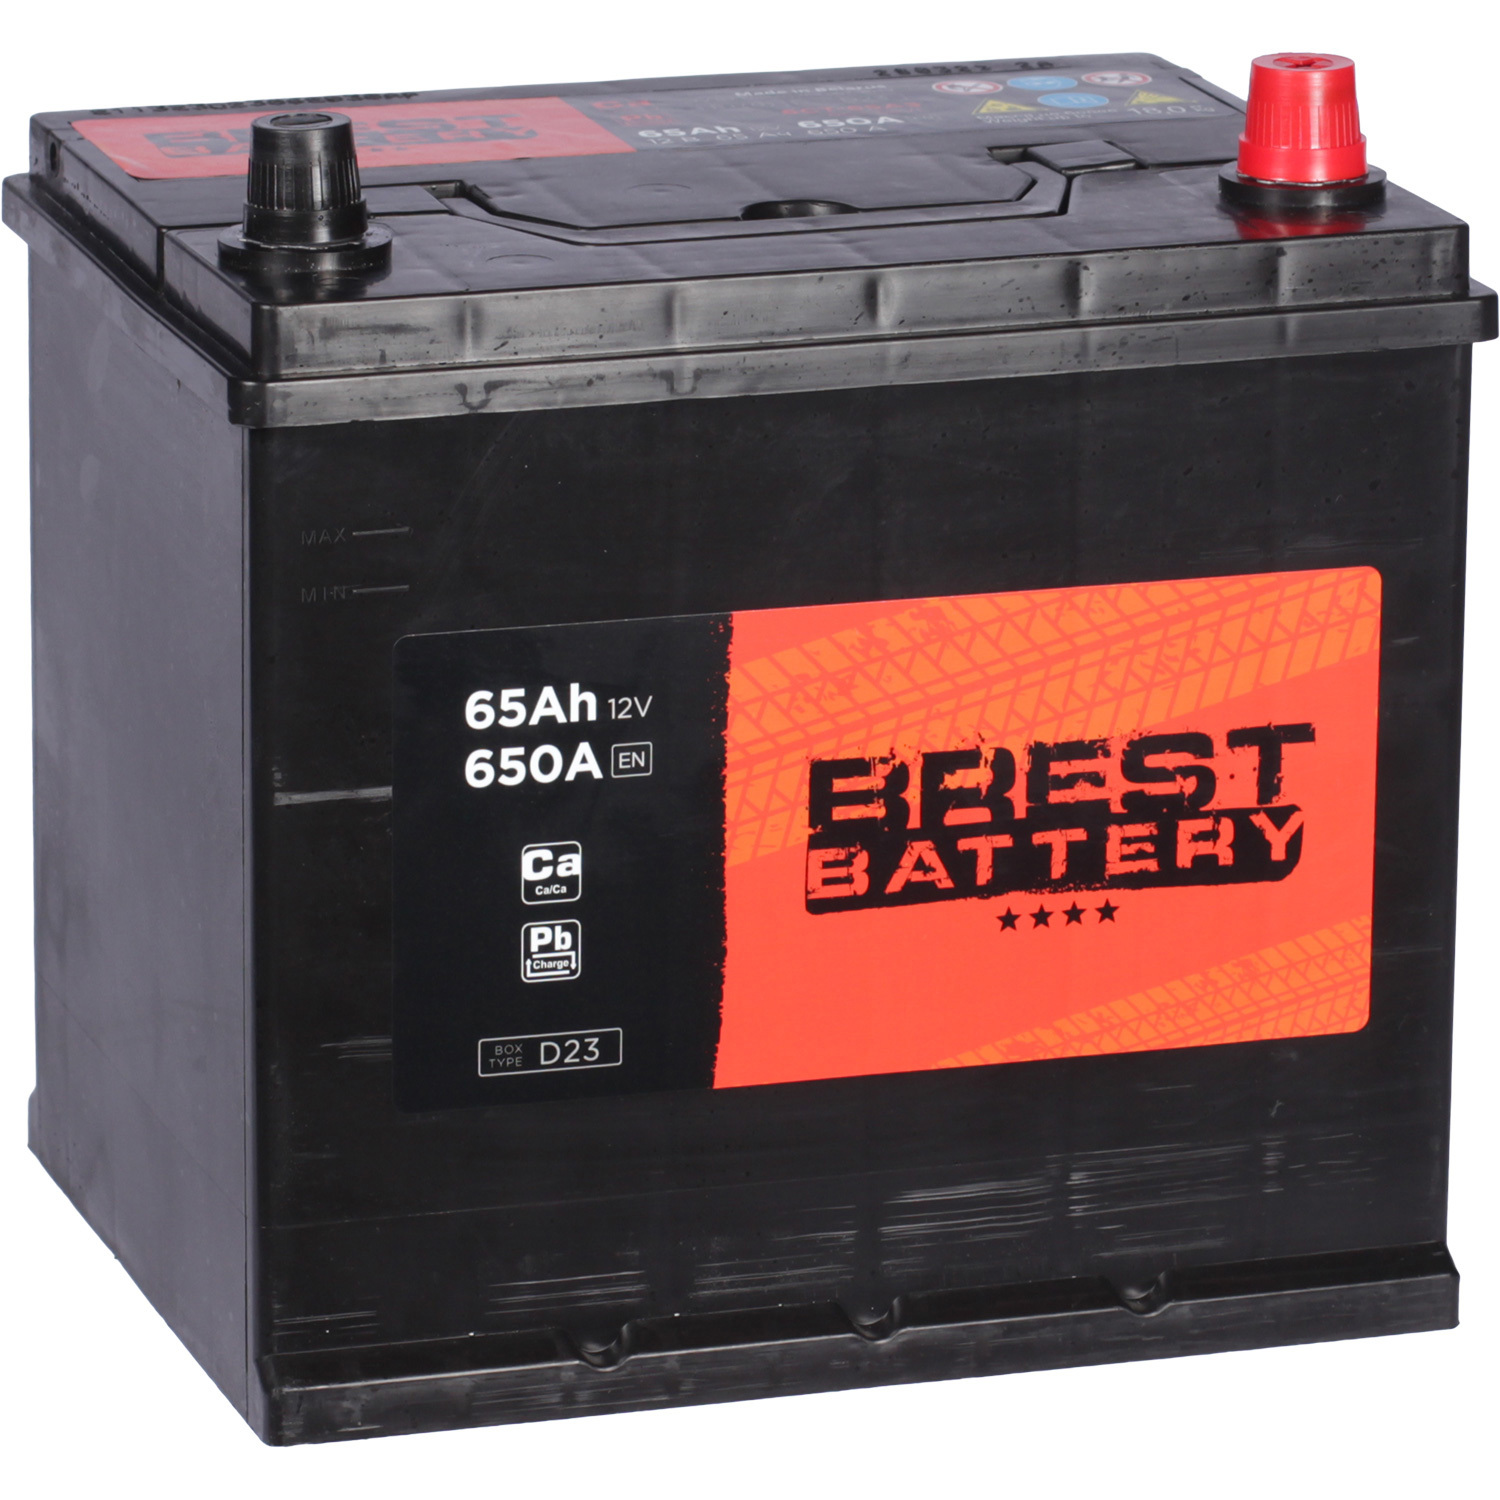 brest battery автомобильный аккумулятор brest battery 110 ач обратная полярность l5 Brest Battery Автомобильный аккумулятор Brest Battery 65 Ач обратная полярность D23L